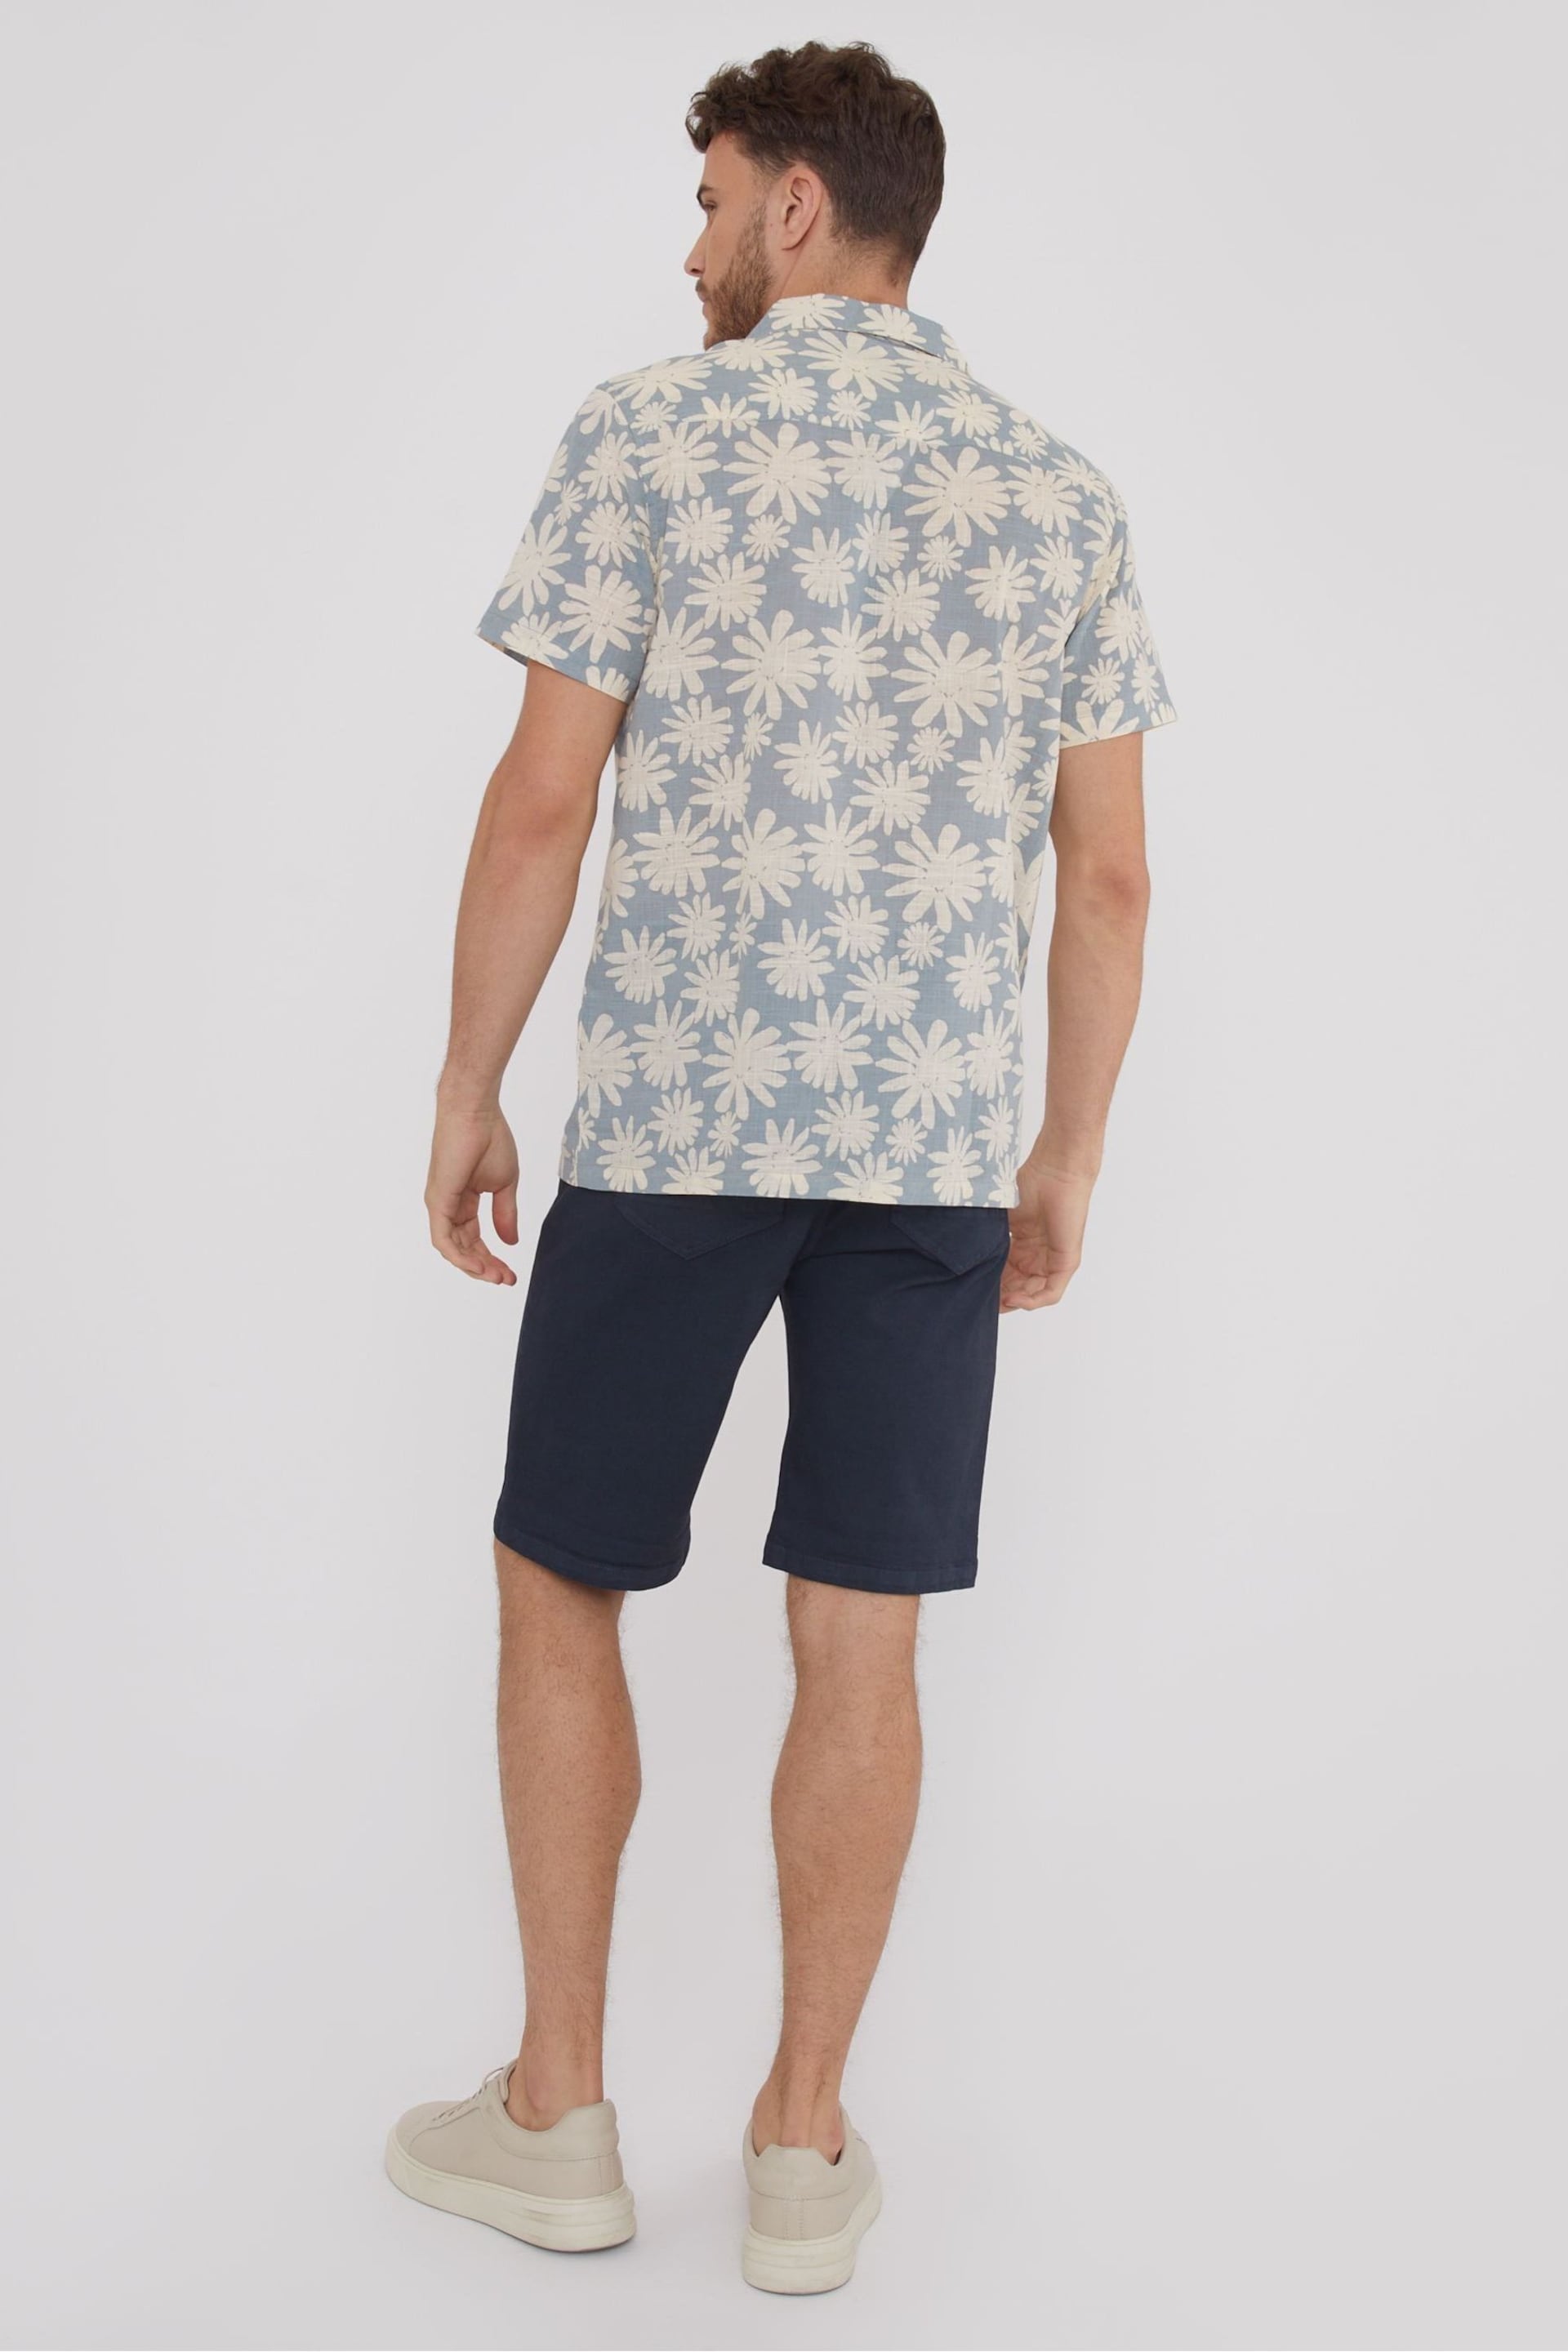 Threadbare Blue Short Sleeve Floral Print Cotton Shirt - Image 3 of 4